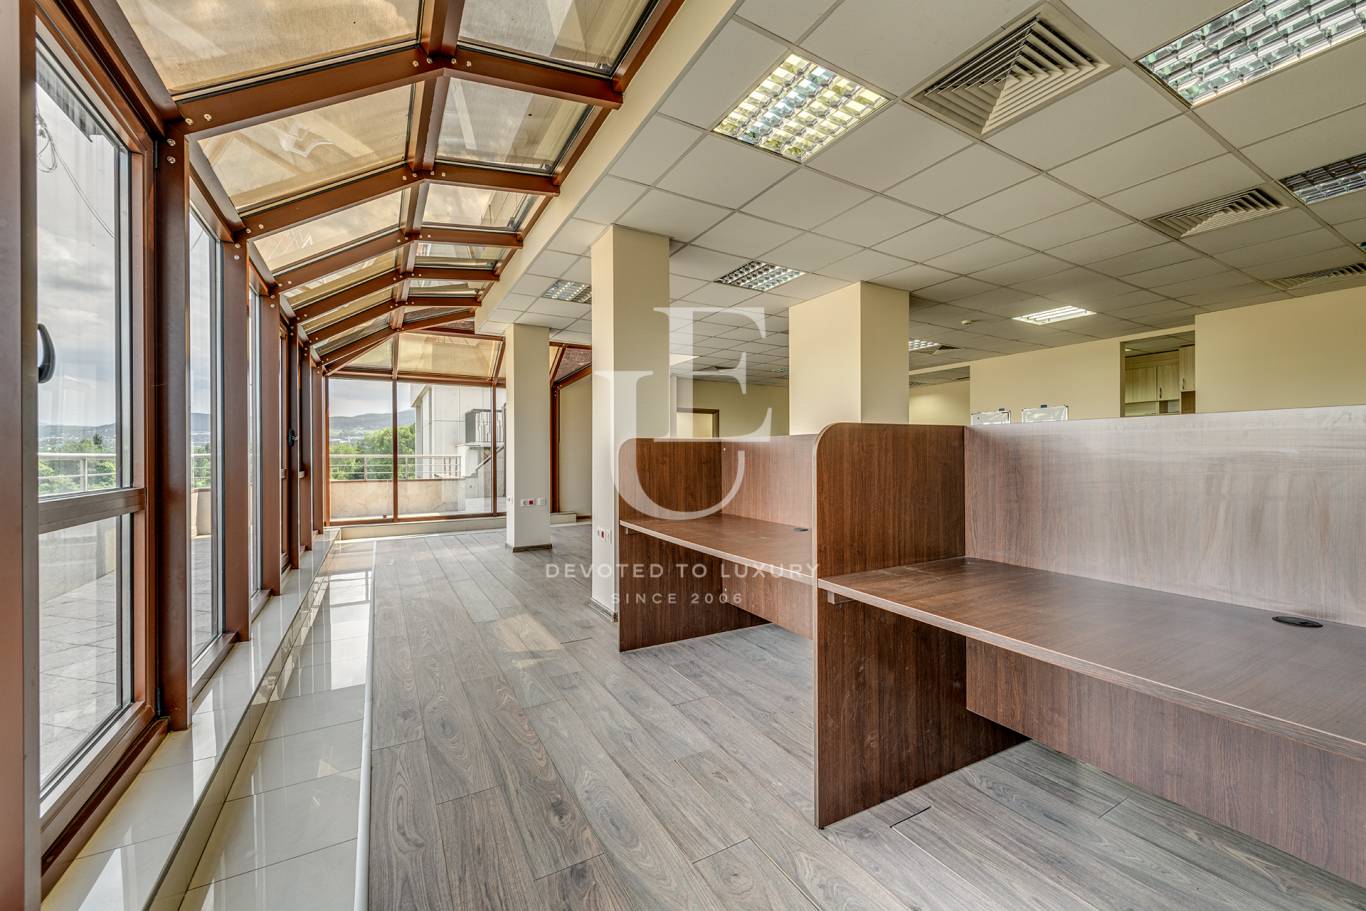 Офис под наем в София, Студентски град - код на имота: K17700 - image 5